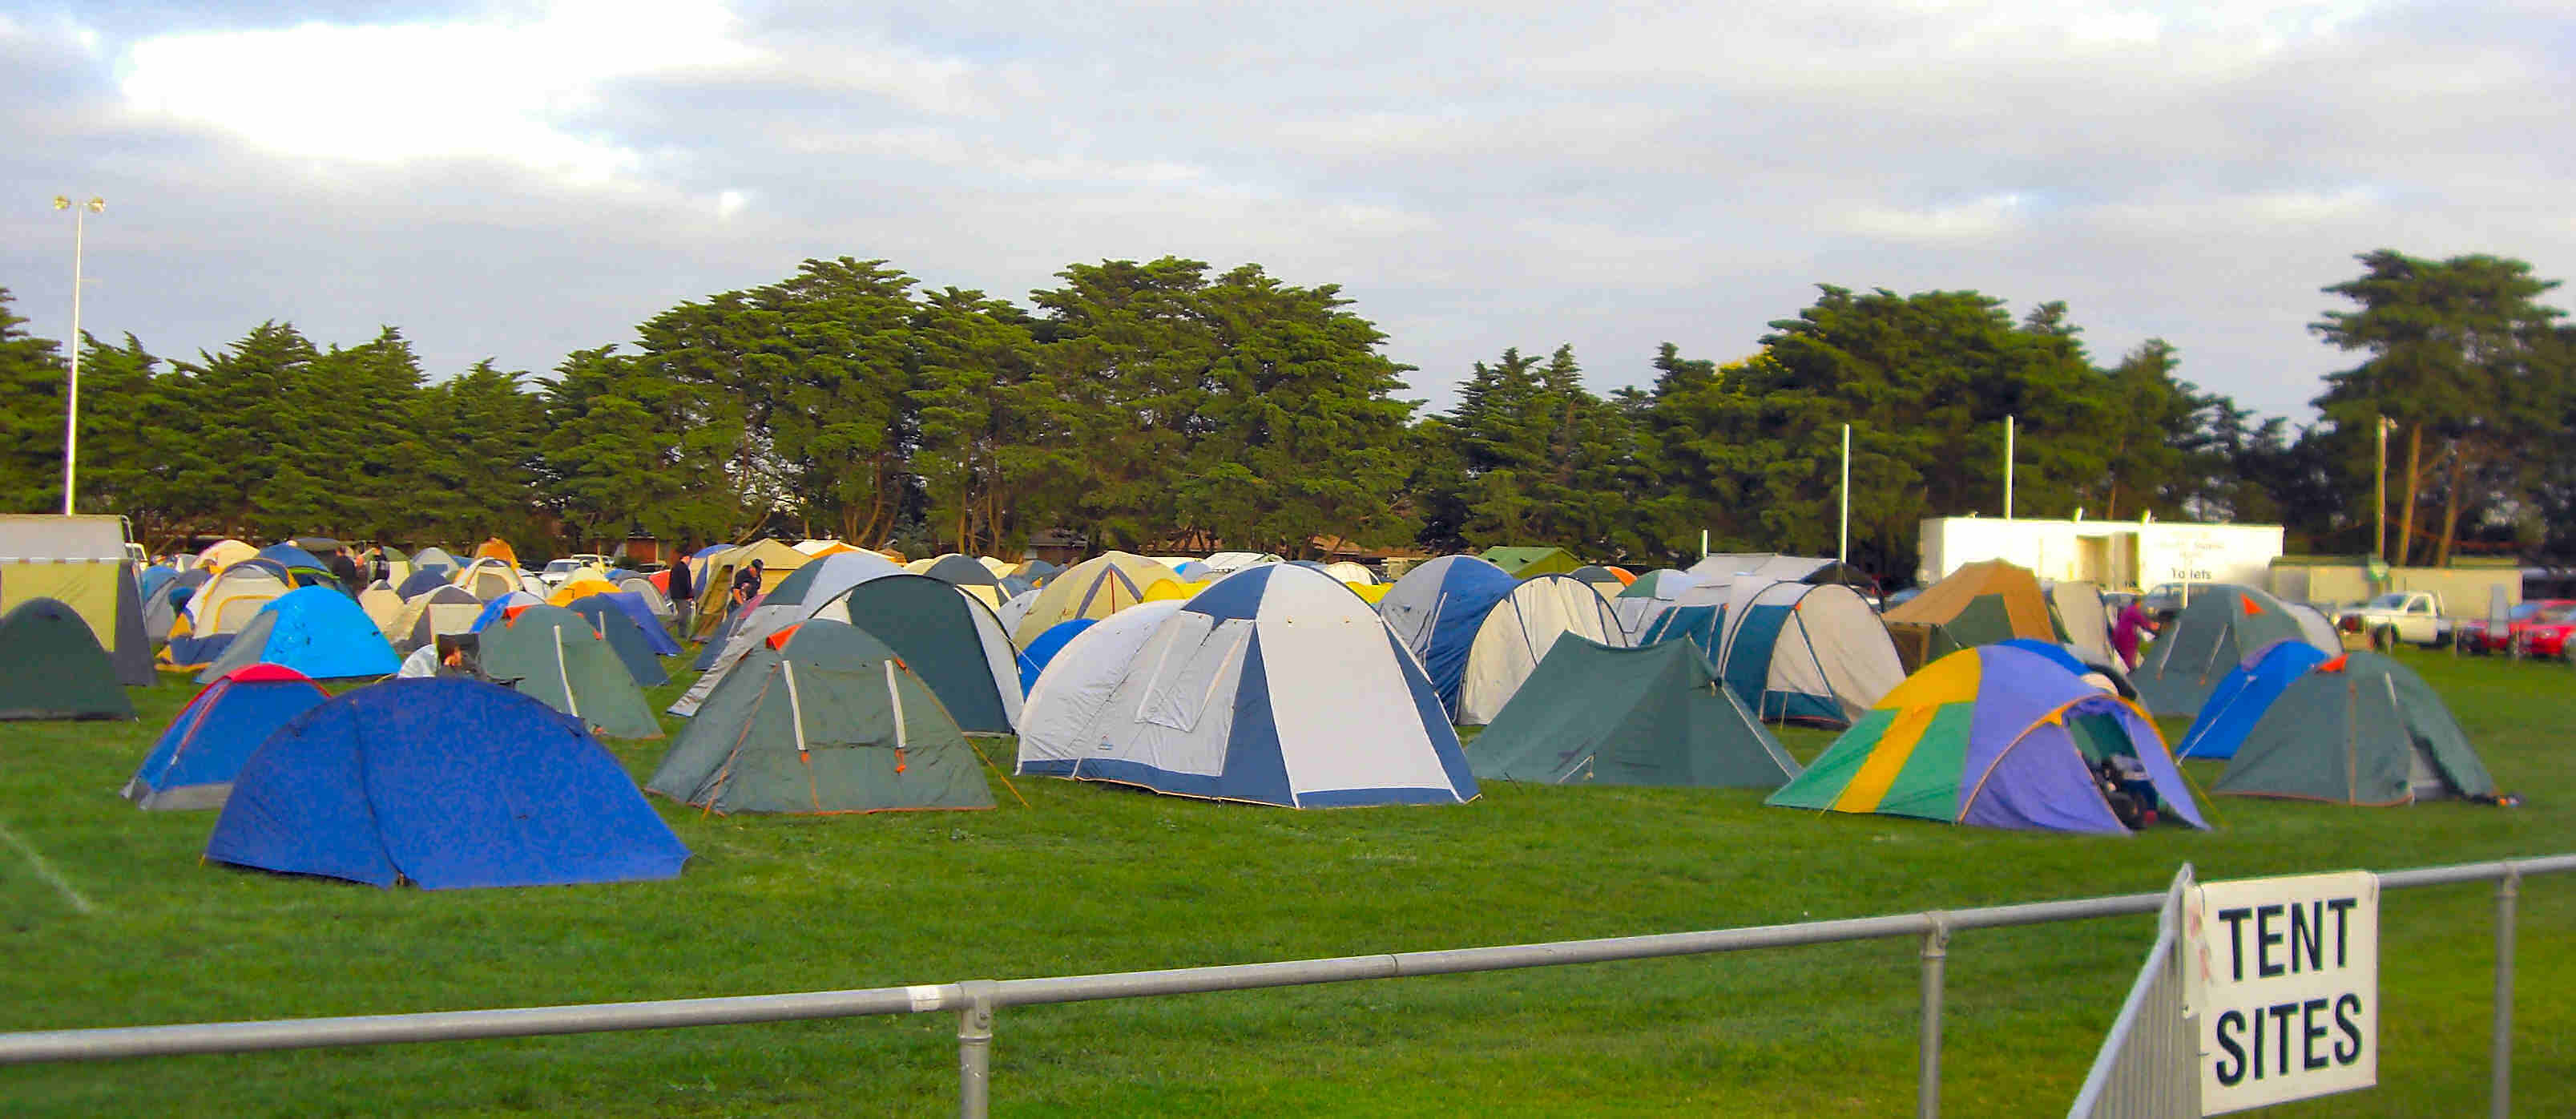 Lara camping ground